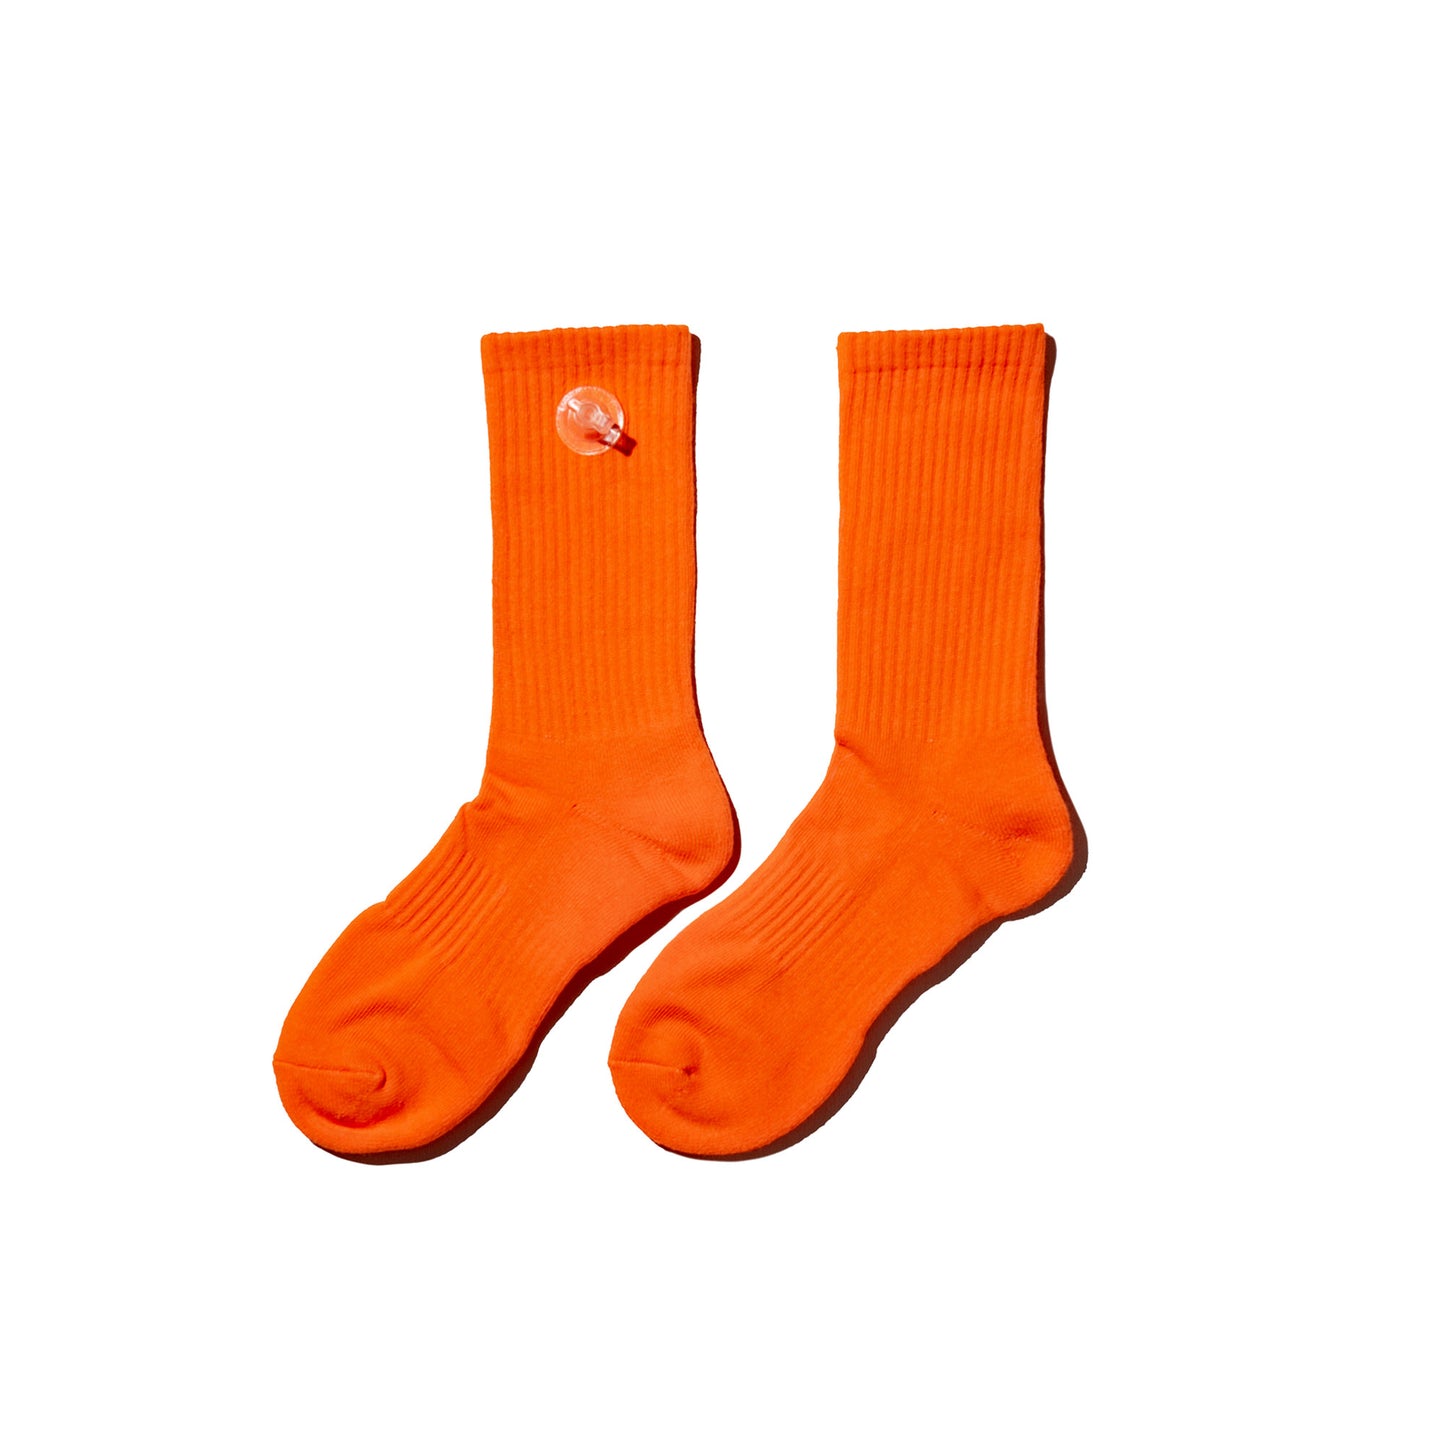 Toson, Inflatable Socks 2 Pack in Black + Orange